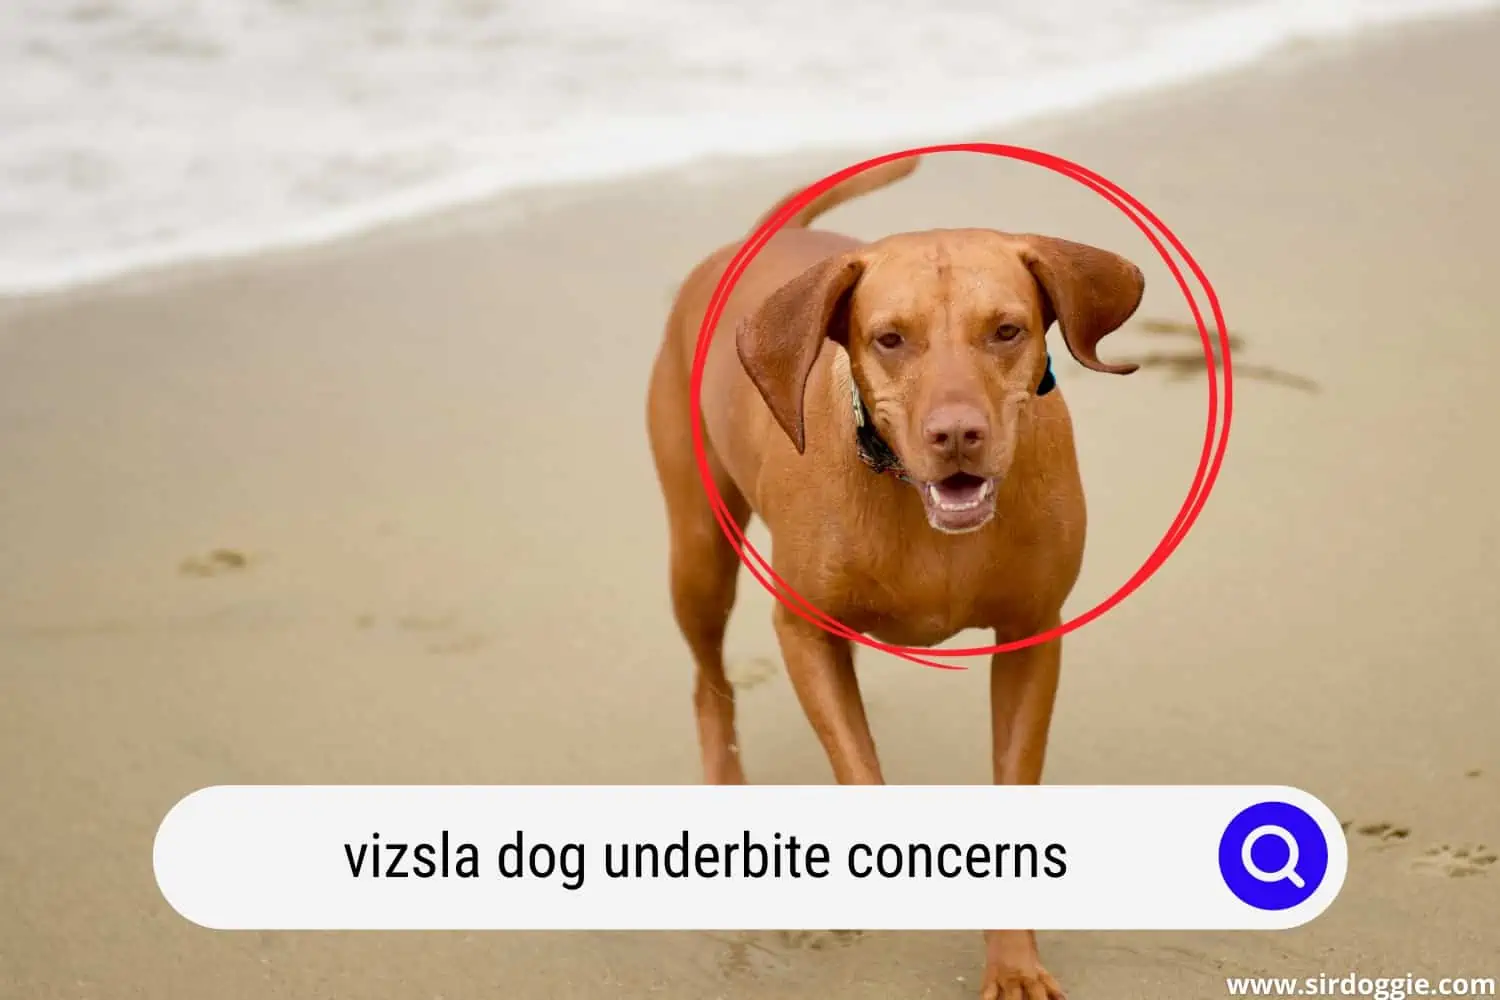 Vizsla dog with underbite teeth conditions